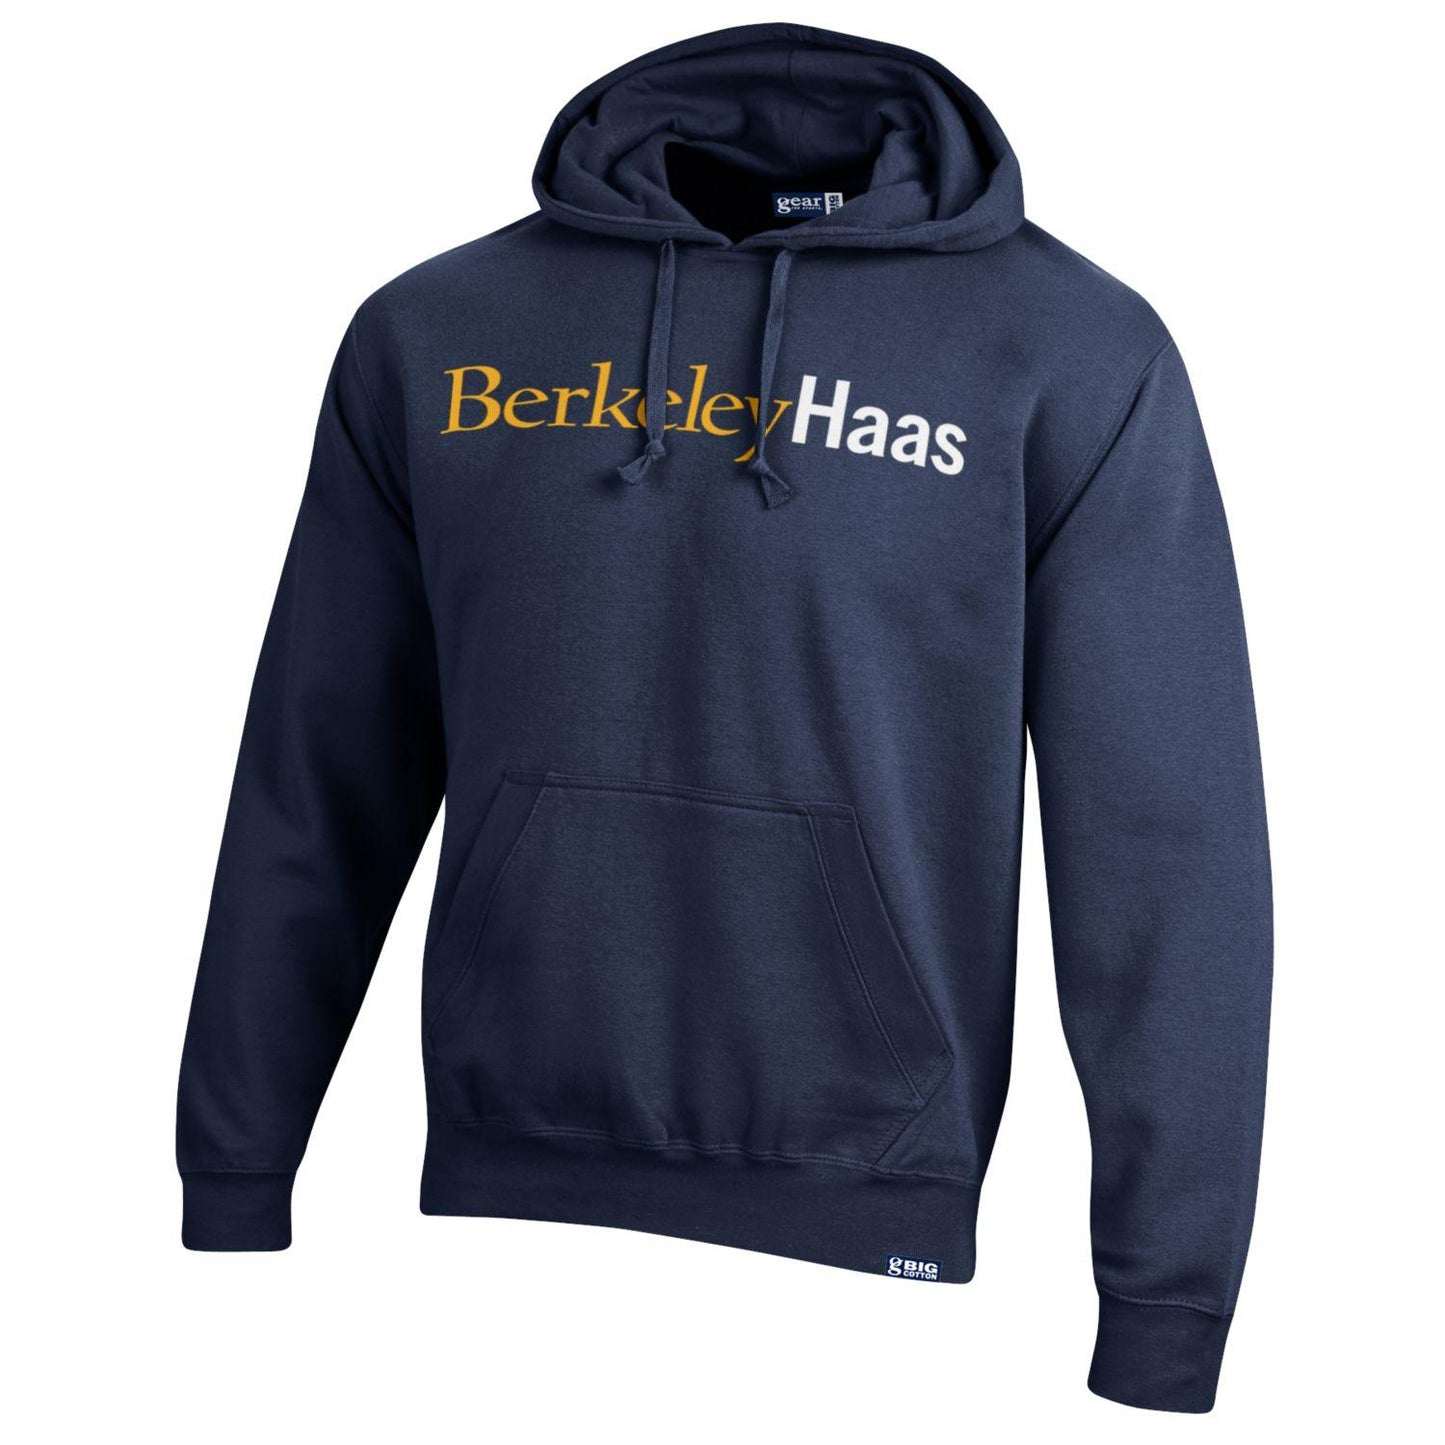 U.C. Berkeley Haas business school rich cotton sweatshirt-Navy-Shop College Wear